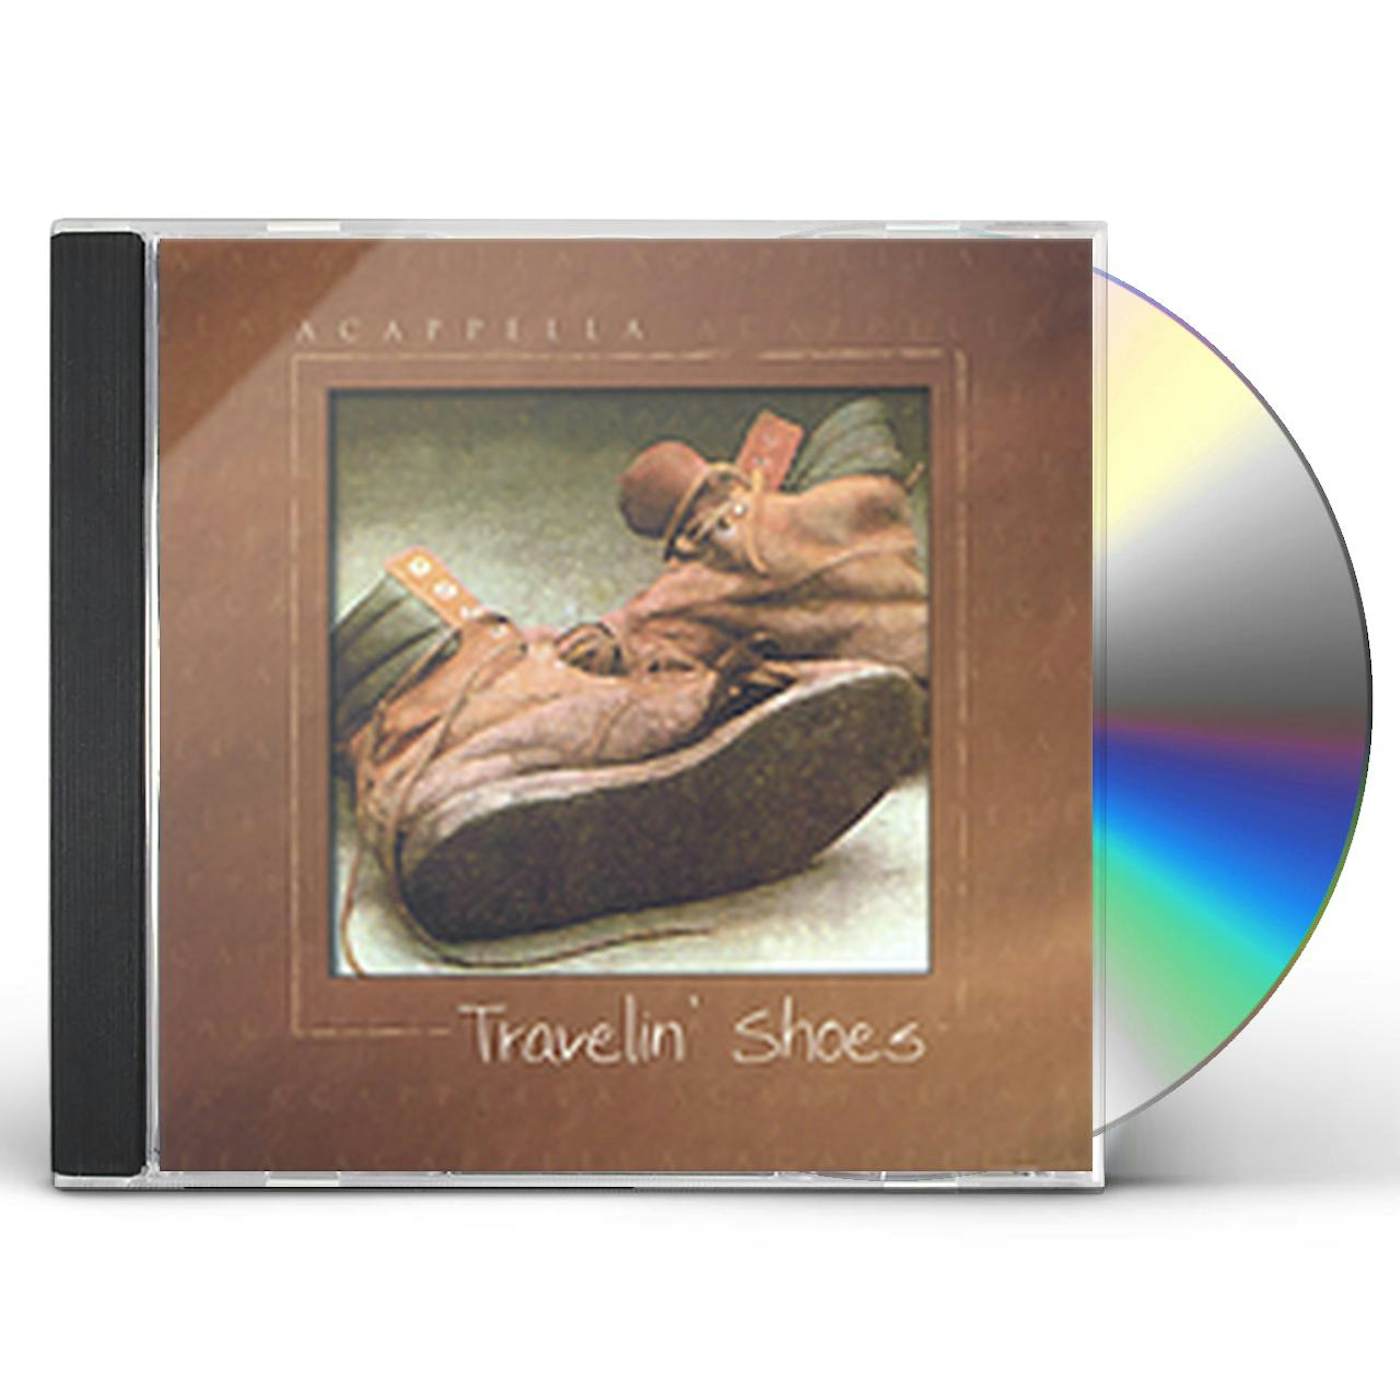 Acappella TRAVELIN SHOES CD